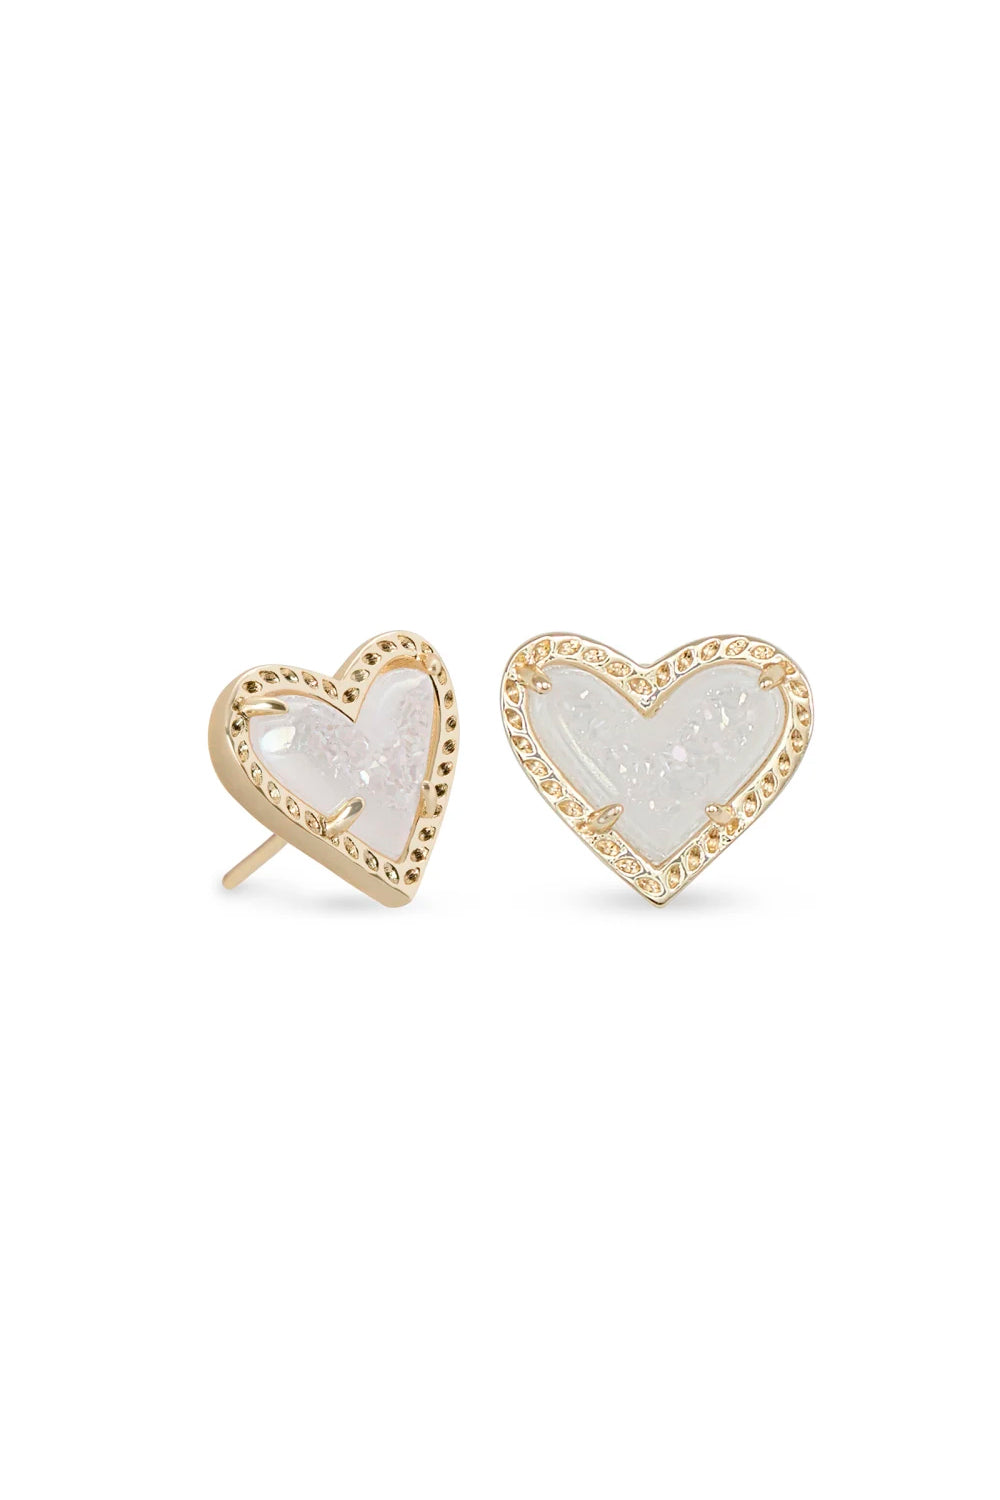 Kendra Scott: Ari Heart Gold Stud Earrings - Iridescent Drusy | Makk Fashions